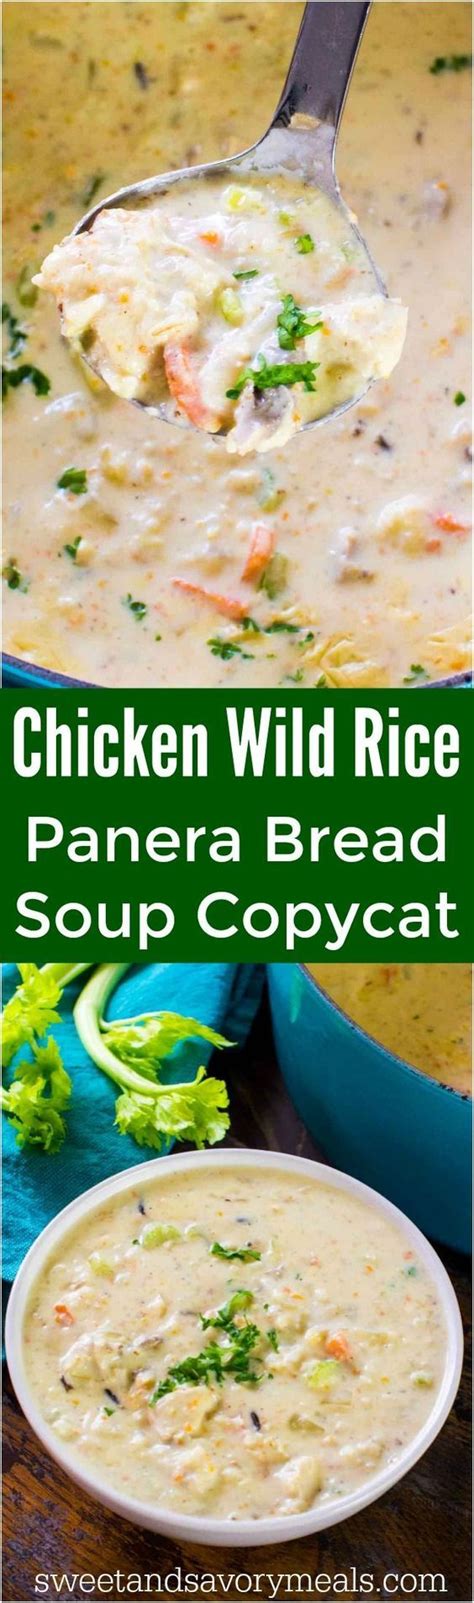 Panera broth bowls nutrition facts. Panera Bread Chicken Wild Rice Soup Copycat [VIDEO ...